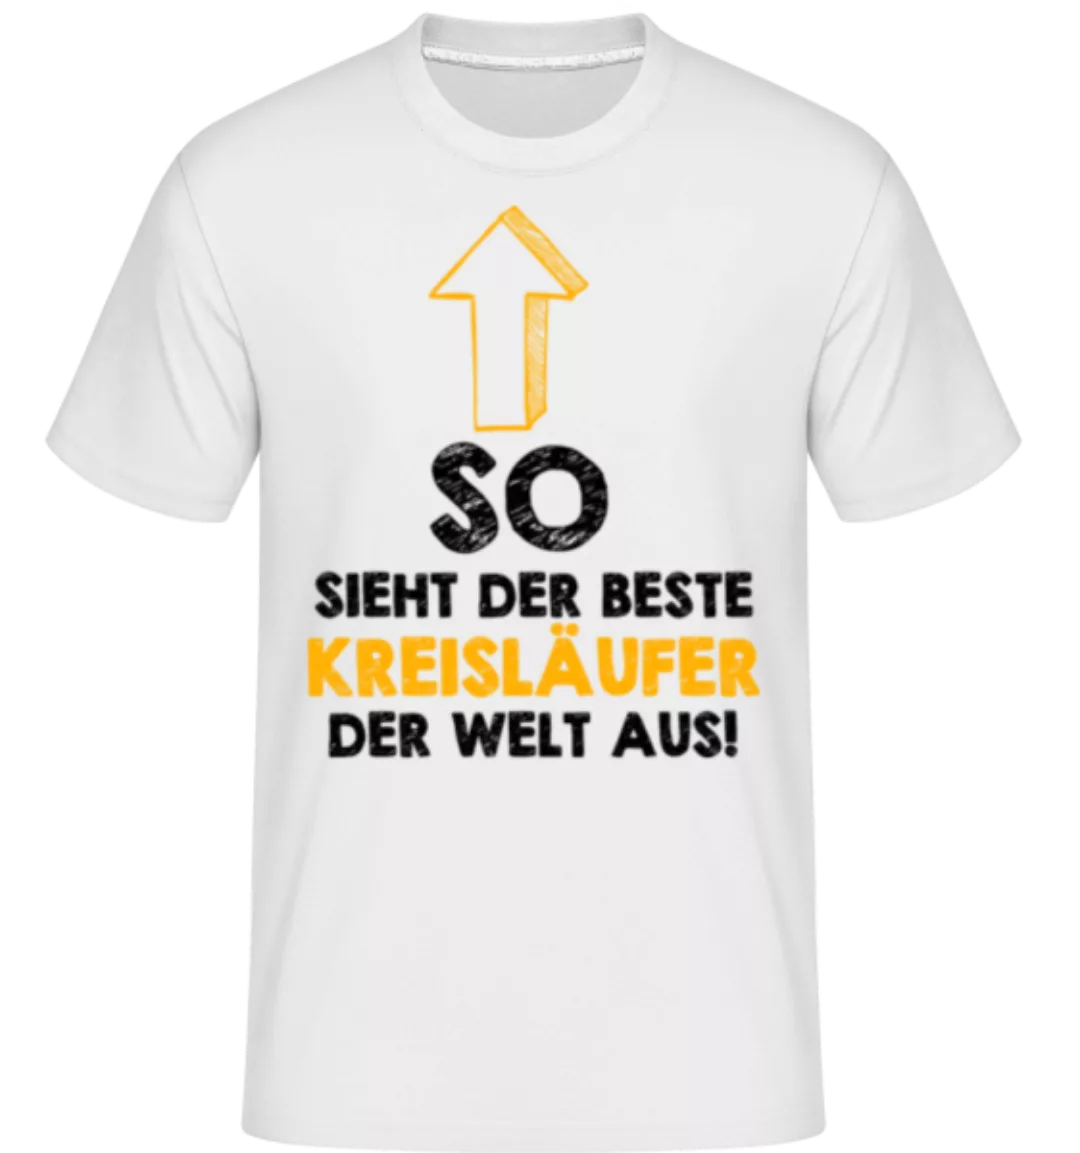 Bester Kreisläufer Der Welt · Shirtinator Männer T-Shirt günstig online kaufen